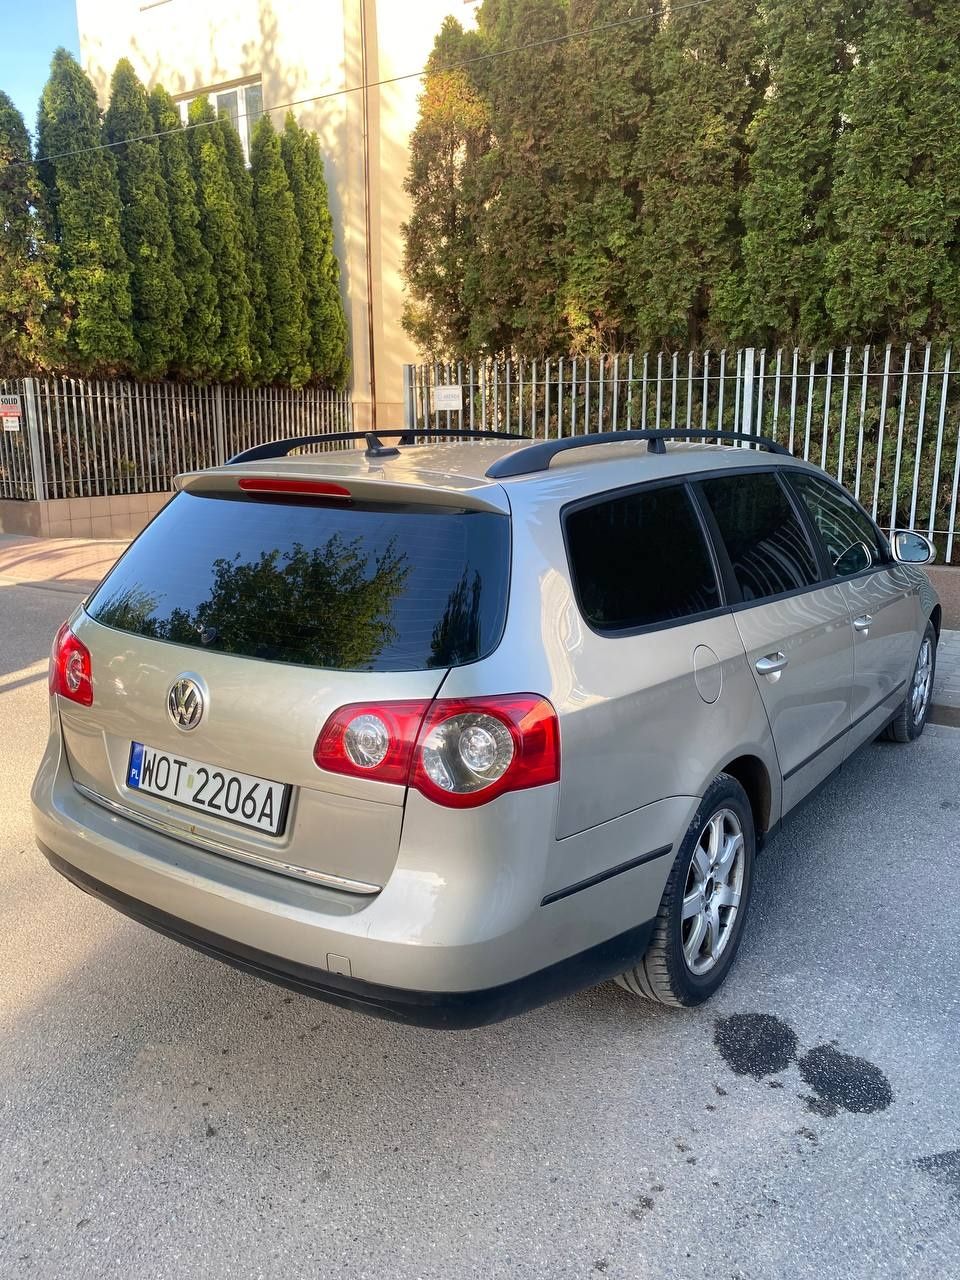 Na Sprzedaż VW Passat b6 1.9tdi 105km Skora/Wygodny/Osczedny/Zadbany